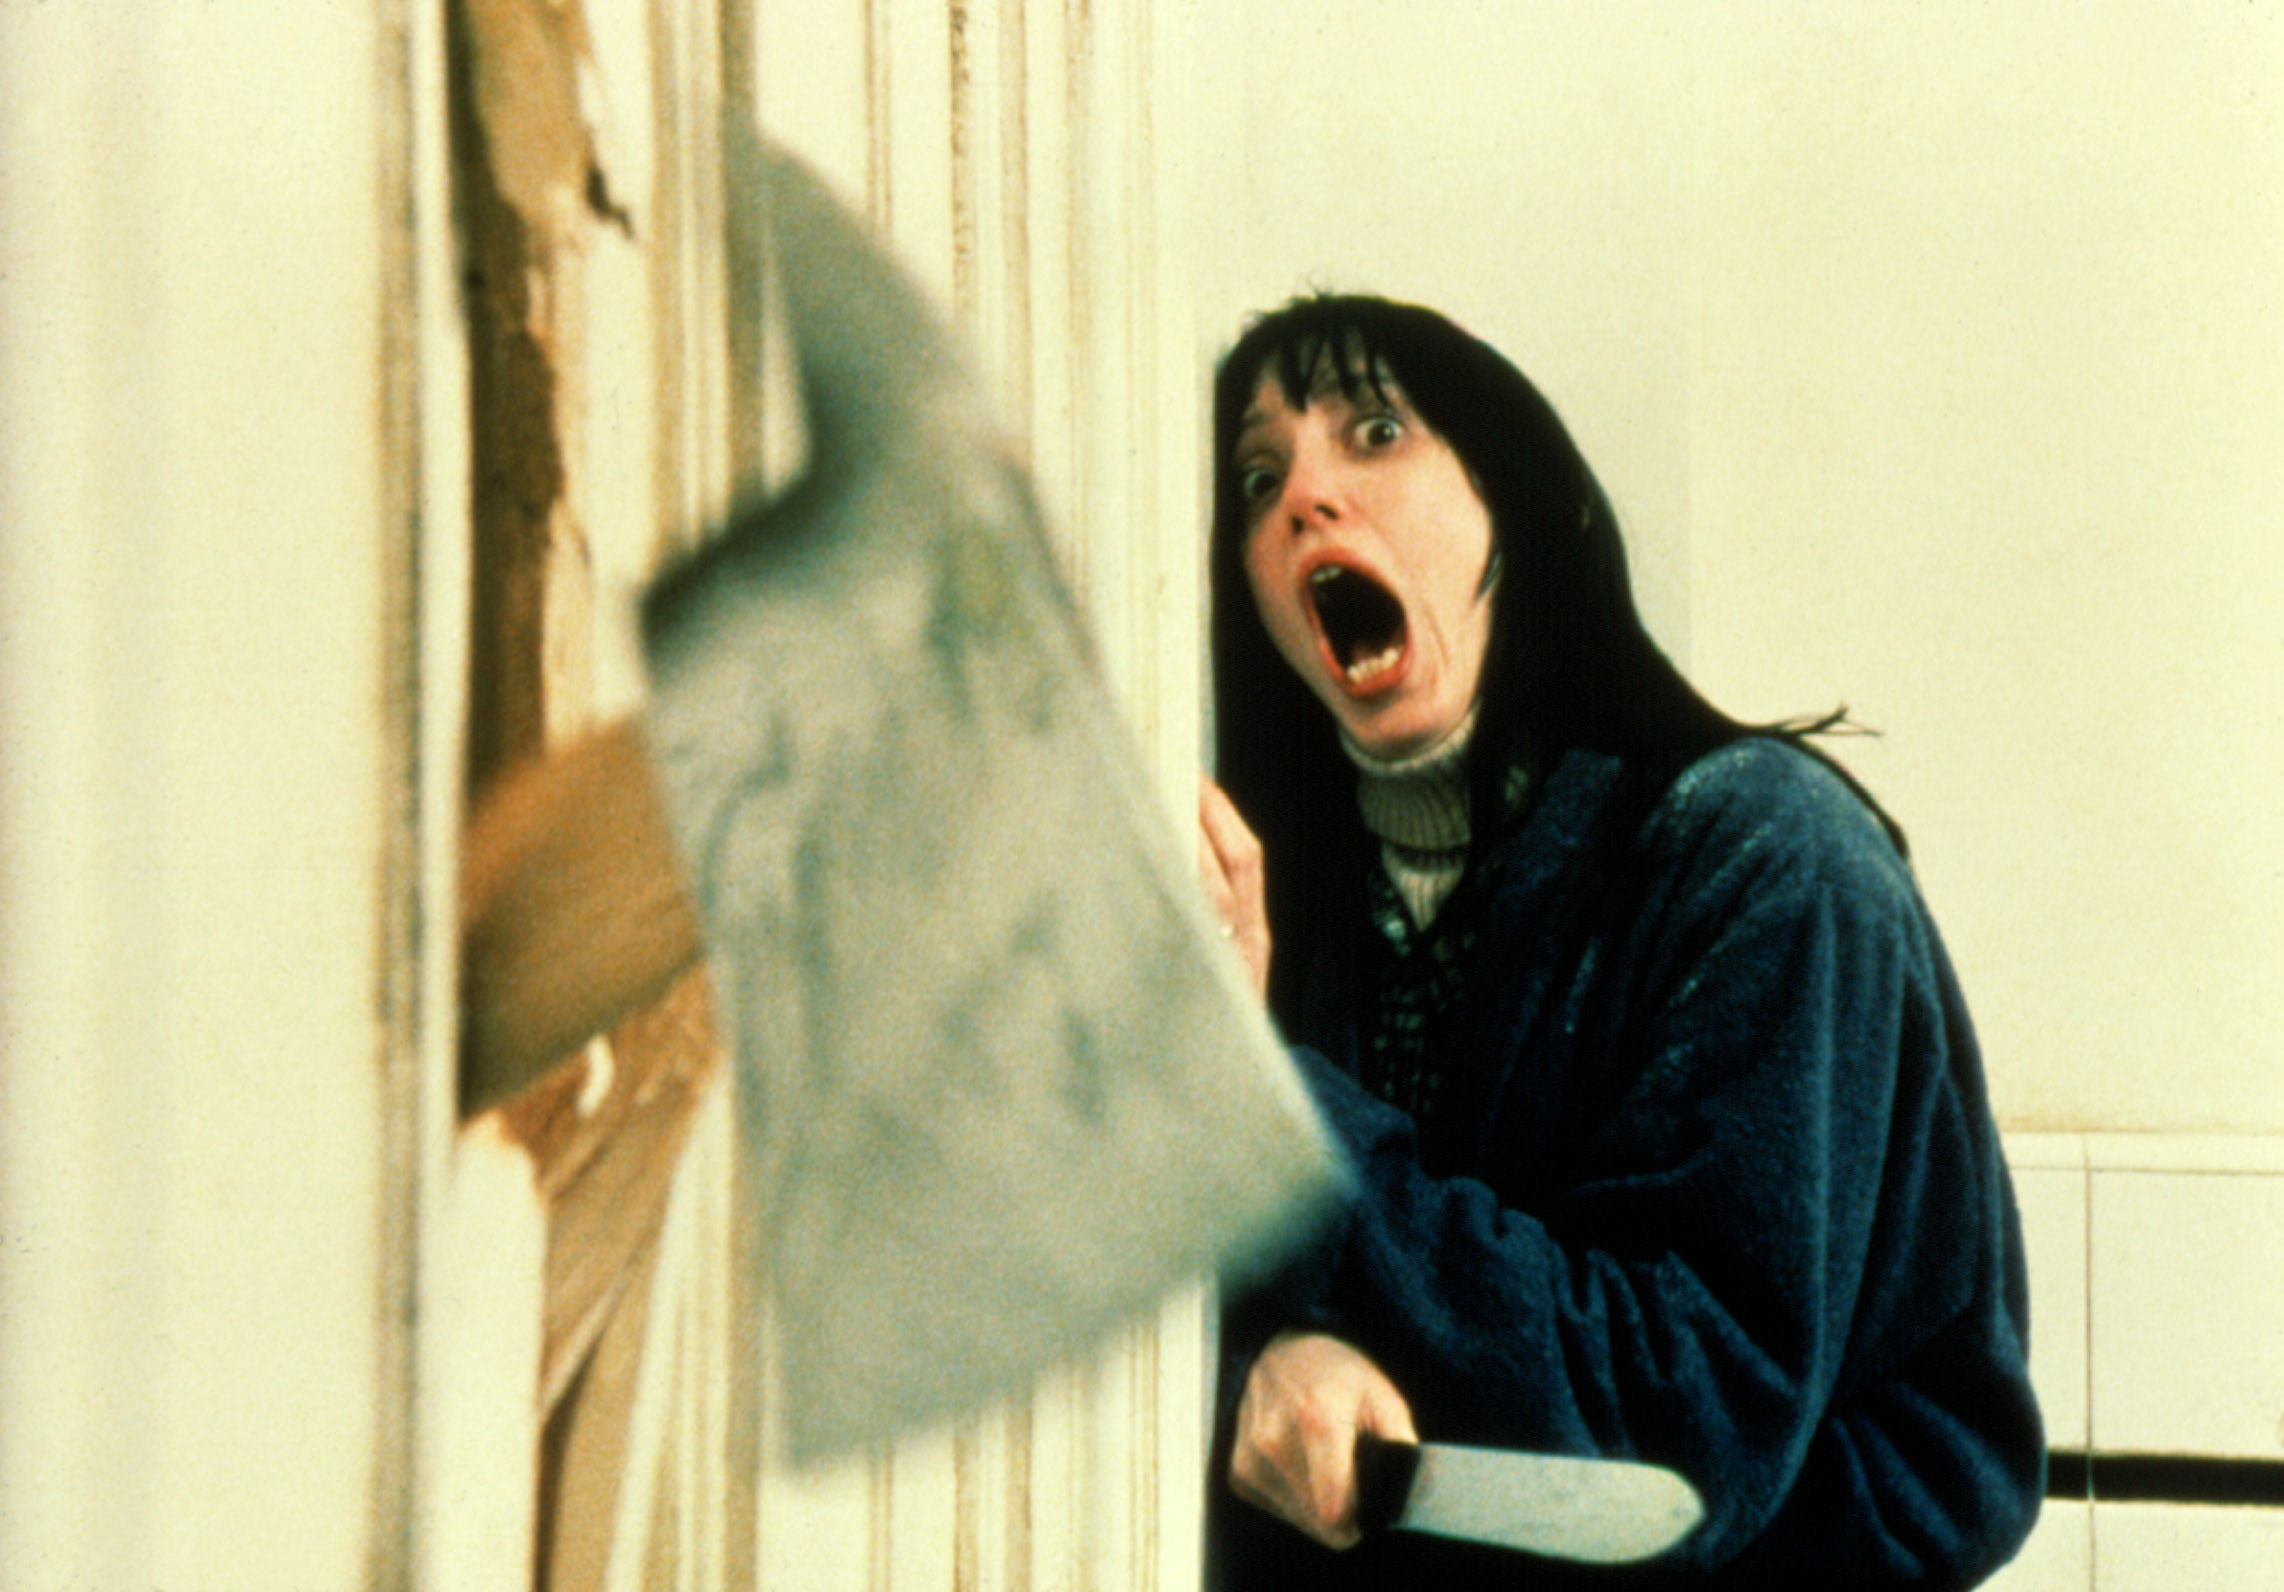 Wendy screaming as Jack breaks through the bathroom door with an axe